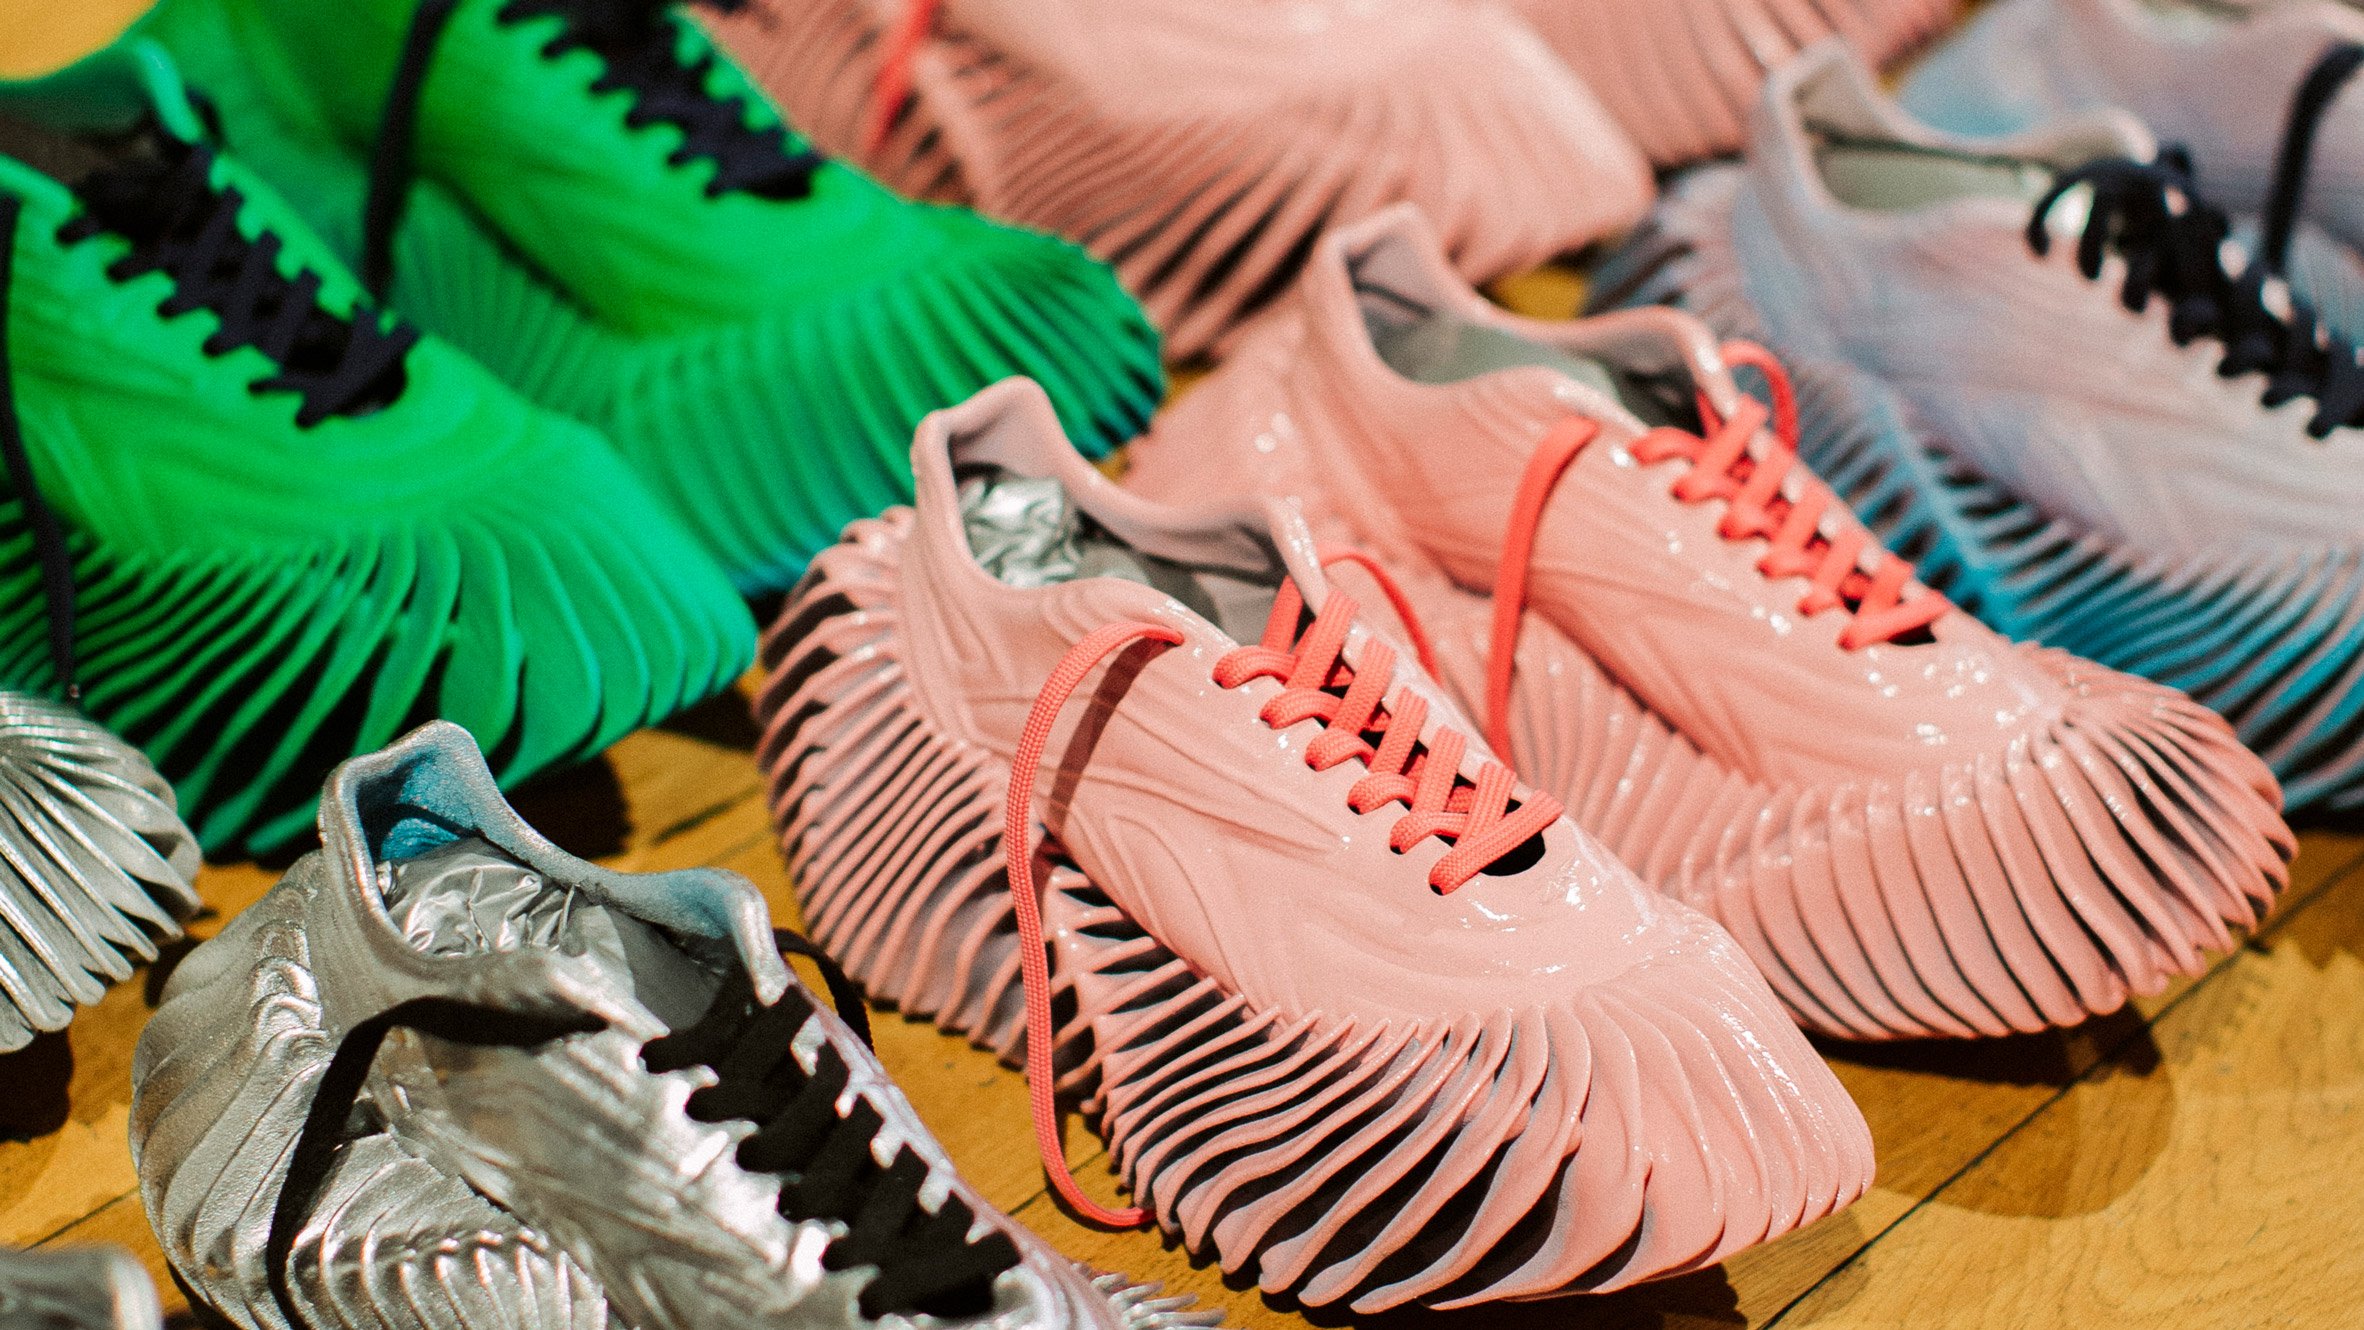 reebok-x-botter-sneakers-3d-printed-trainers-with-vibrant-colors-1 Reebok x Botter Sneakers: 3D-Printed Trainers with Vibrant Colors